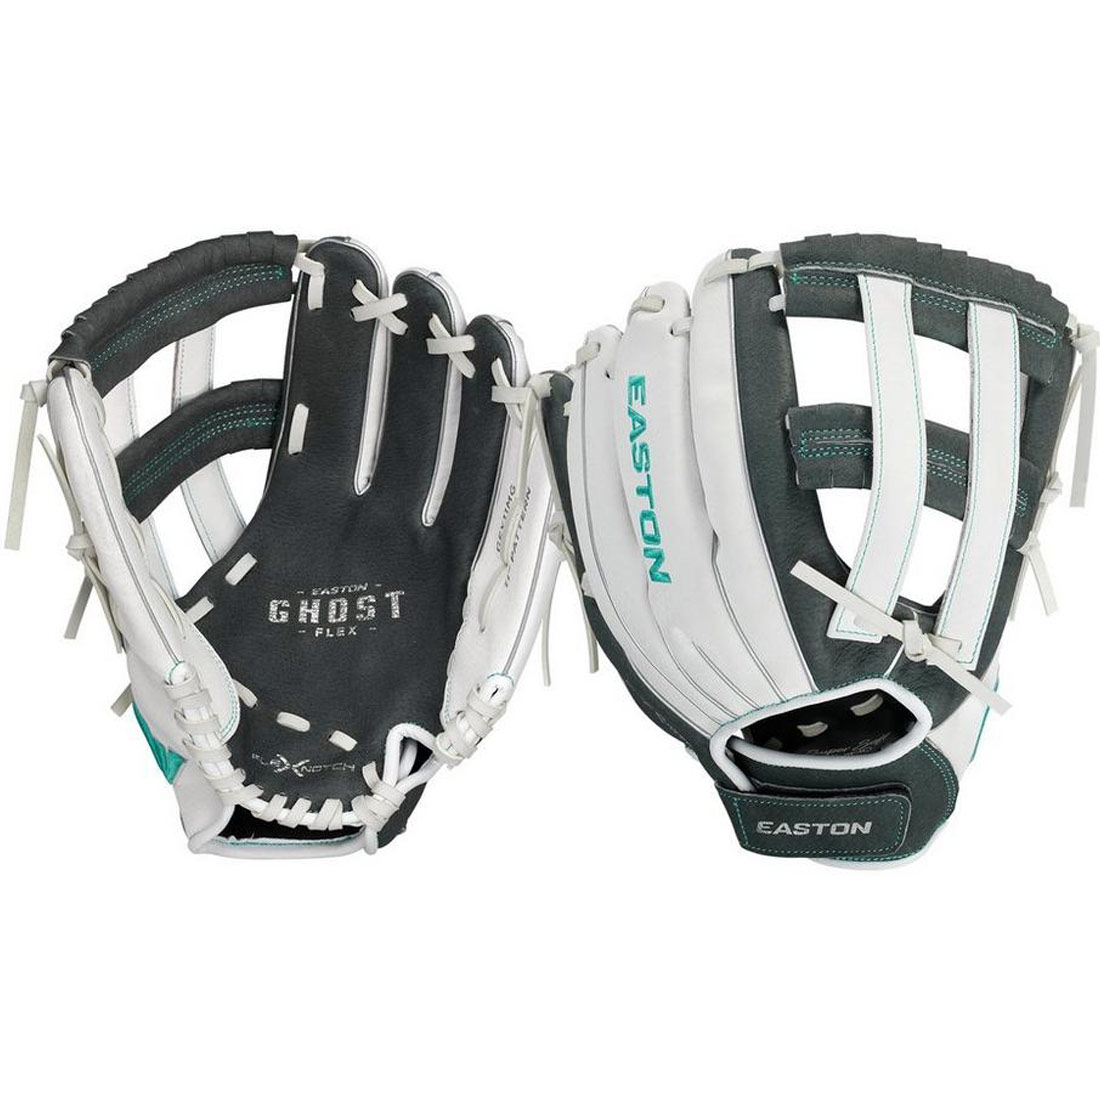 Easton Ghost Flex Youth Fastpitch Softball Glove 11\" GFY11MG